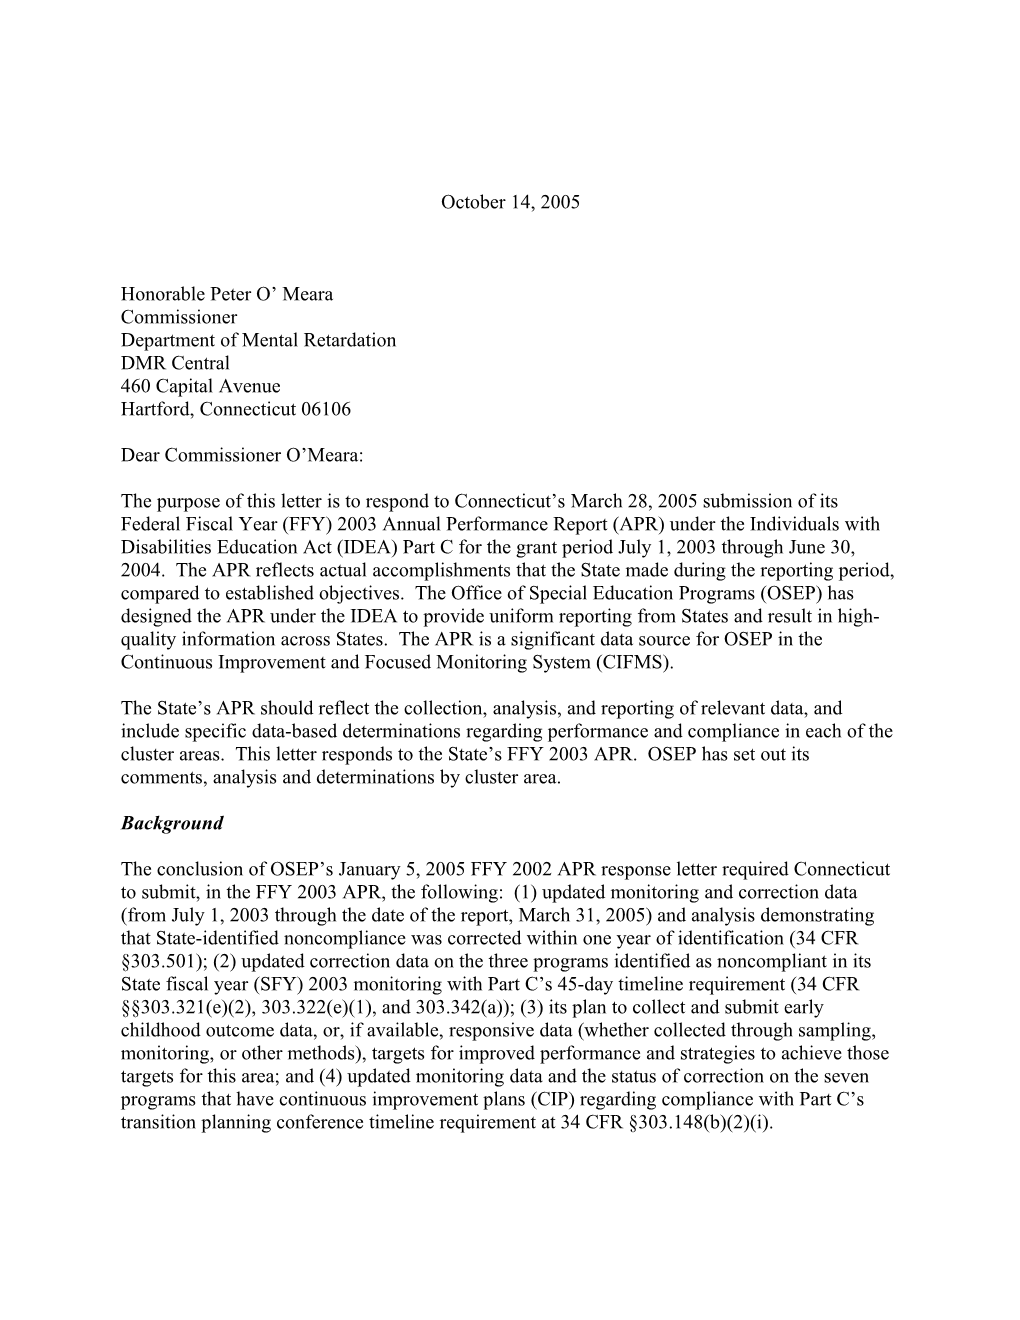 Connecticut Part C APR Letter for Grant Year 2003-2004 (Msword)